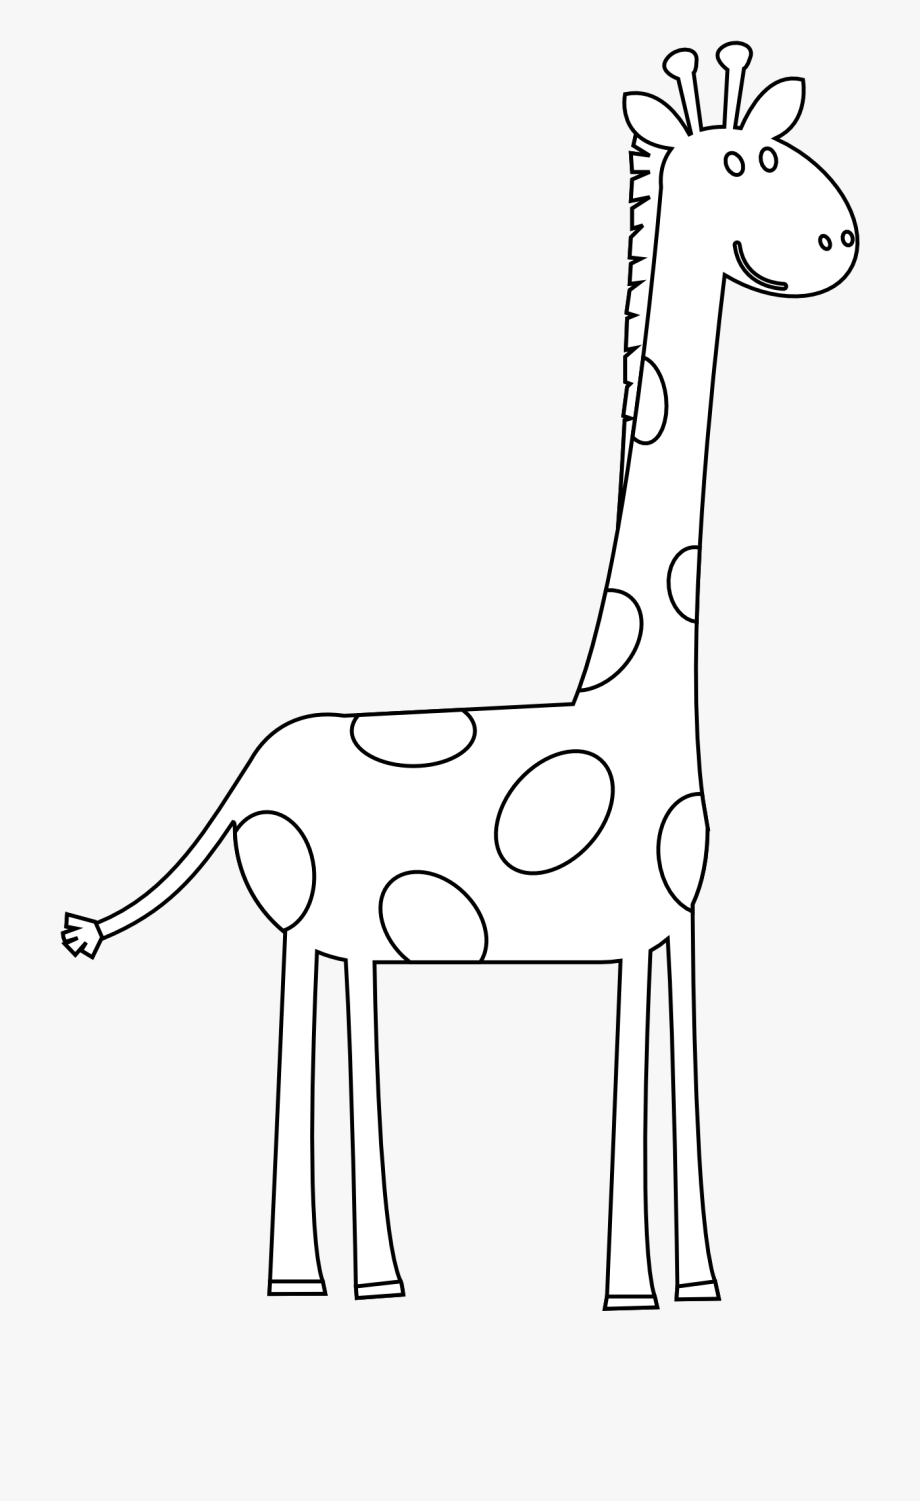 Colorful Animal Giraffe Black White Line Art 999px.